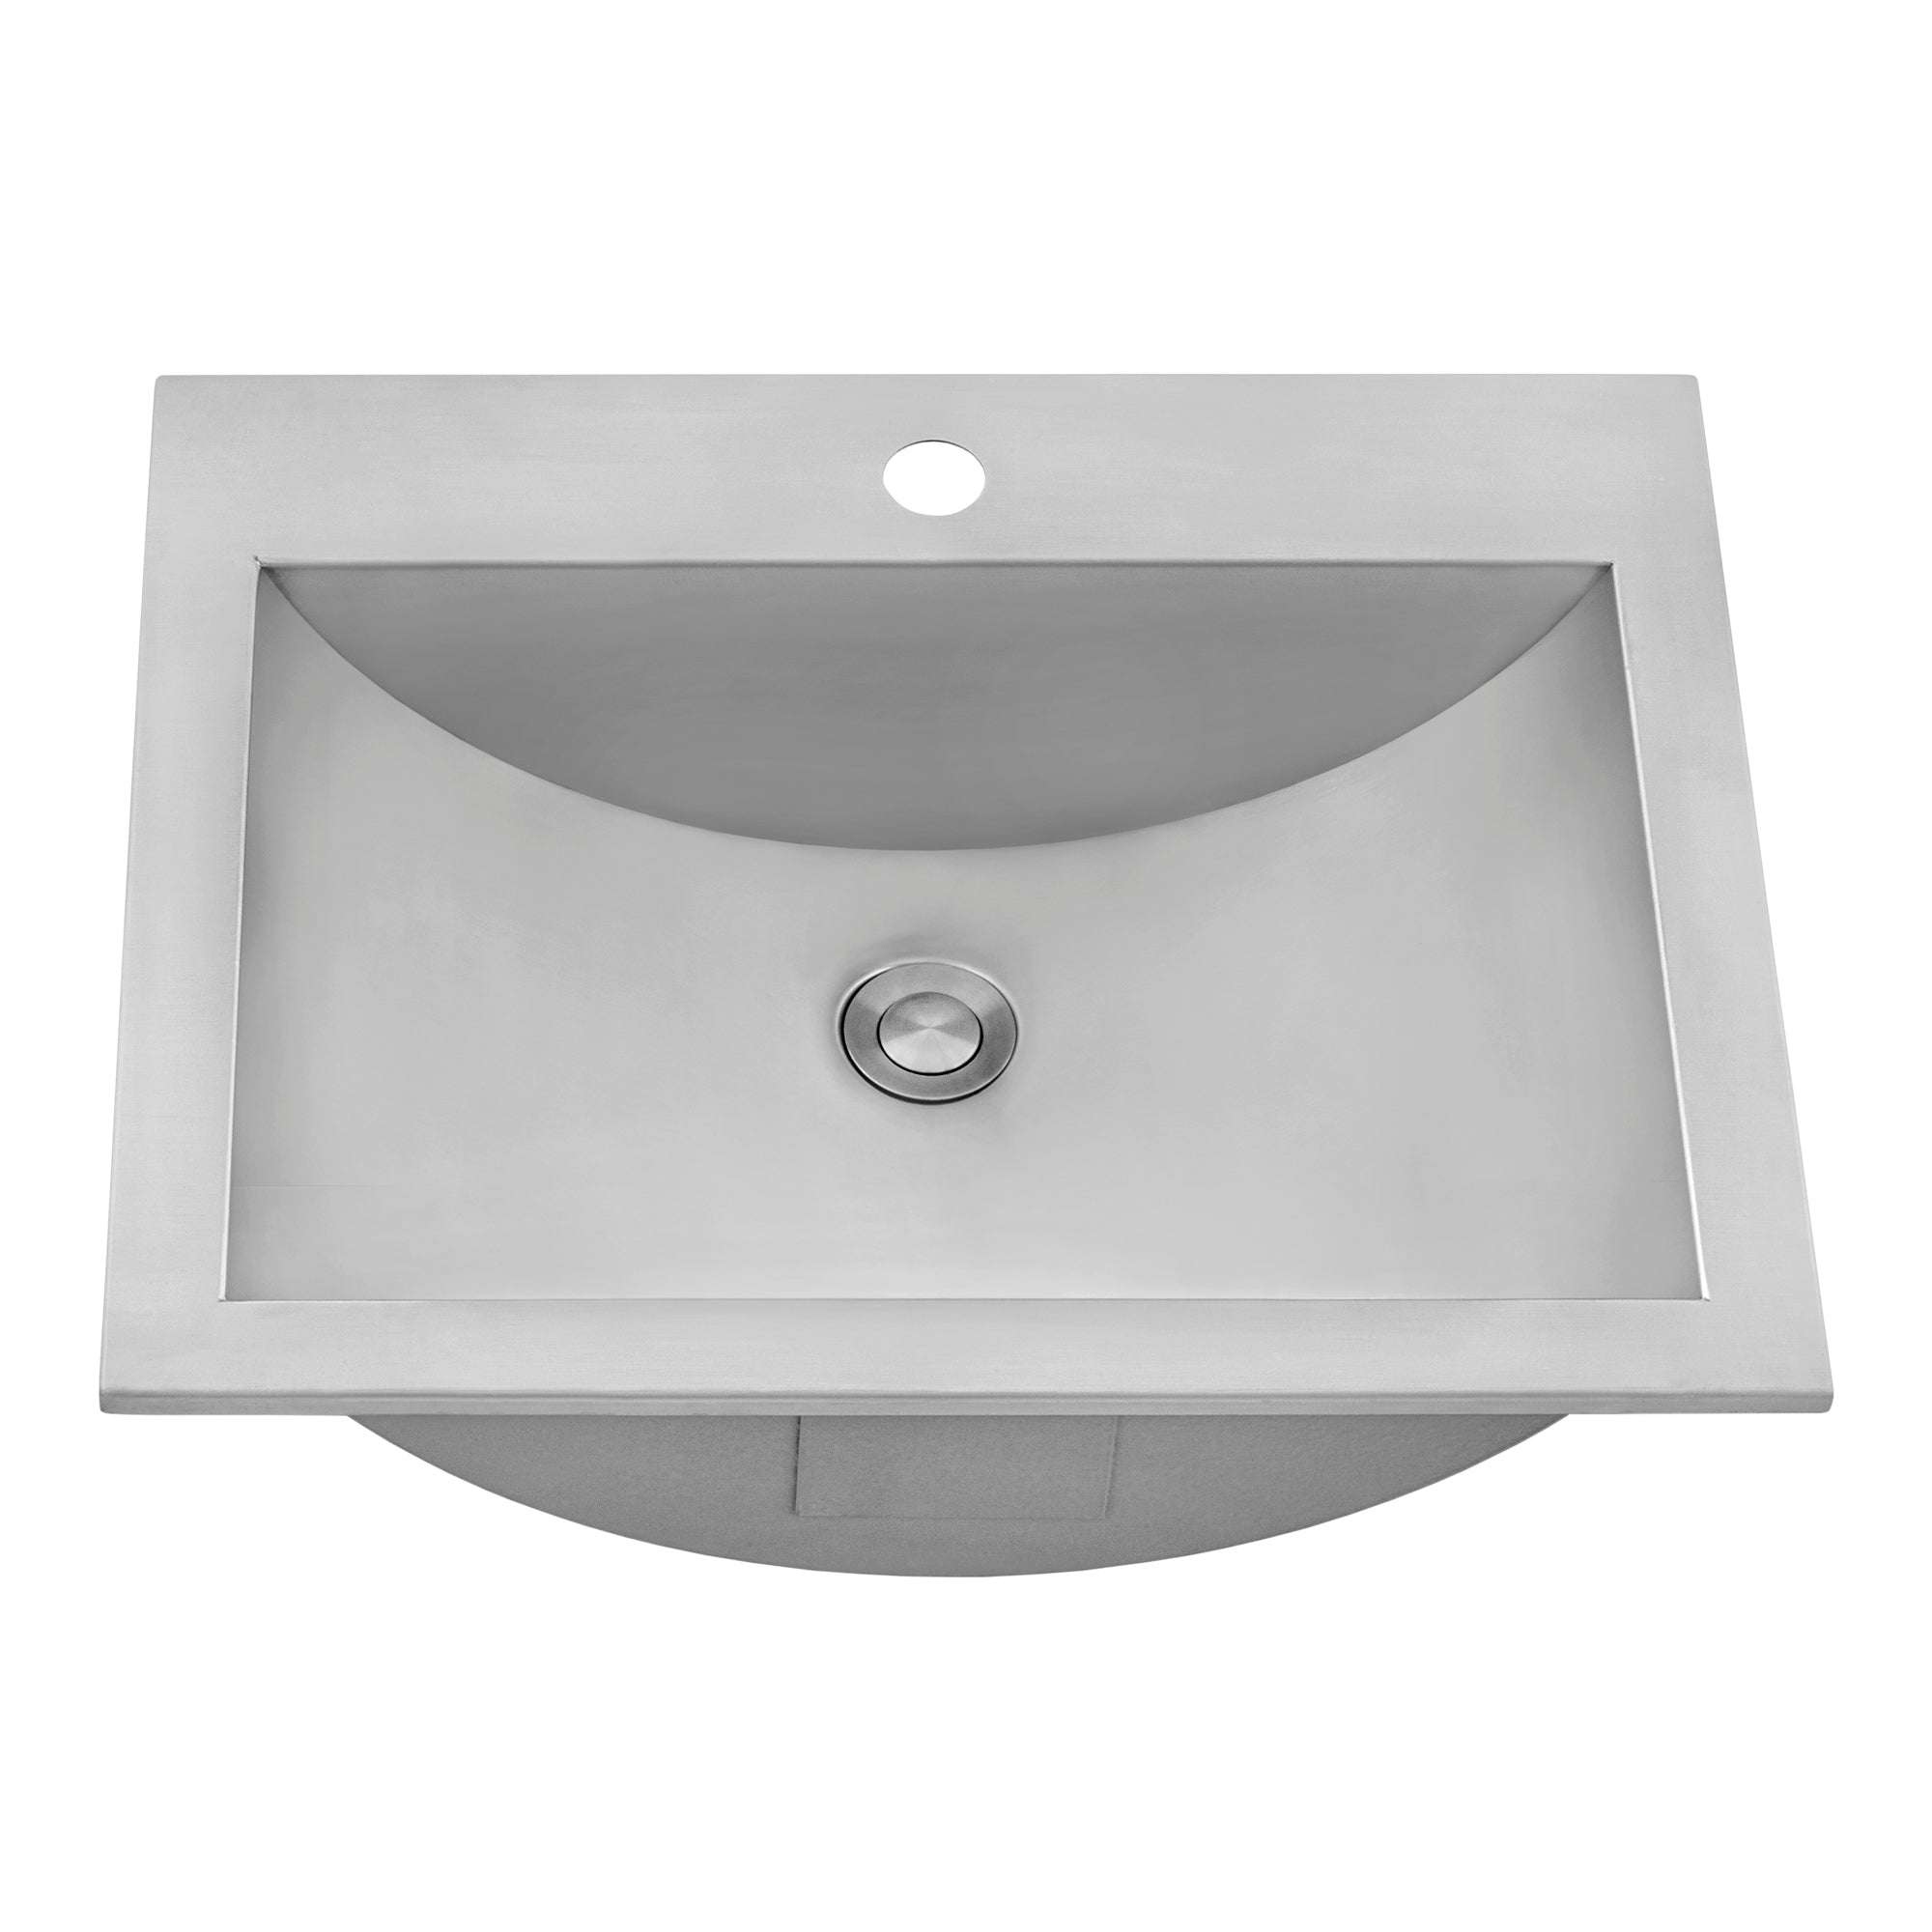 Ruvati 21" x 17" Topmount Stainless Steel Bathroom Sink